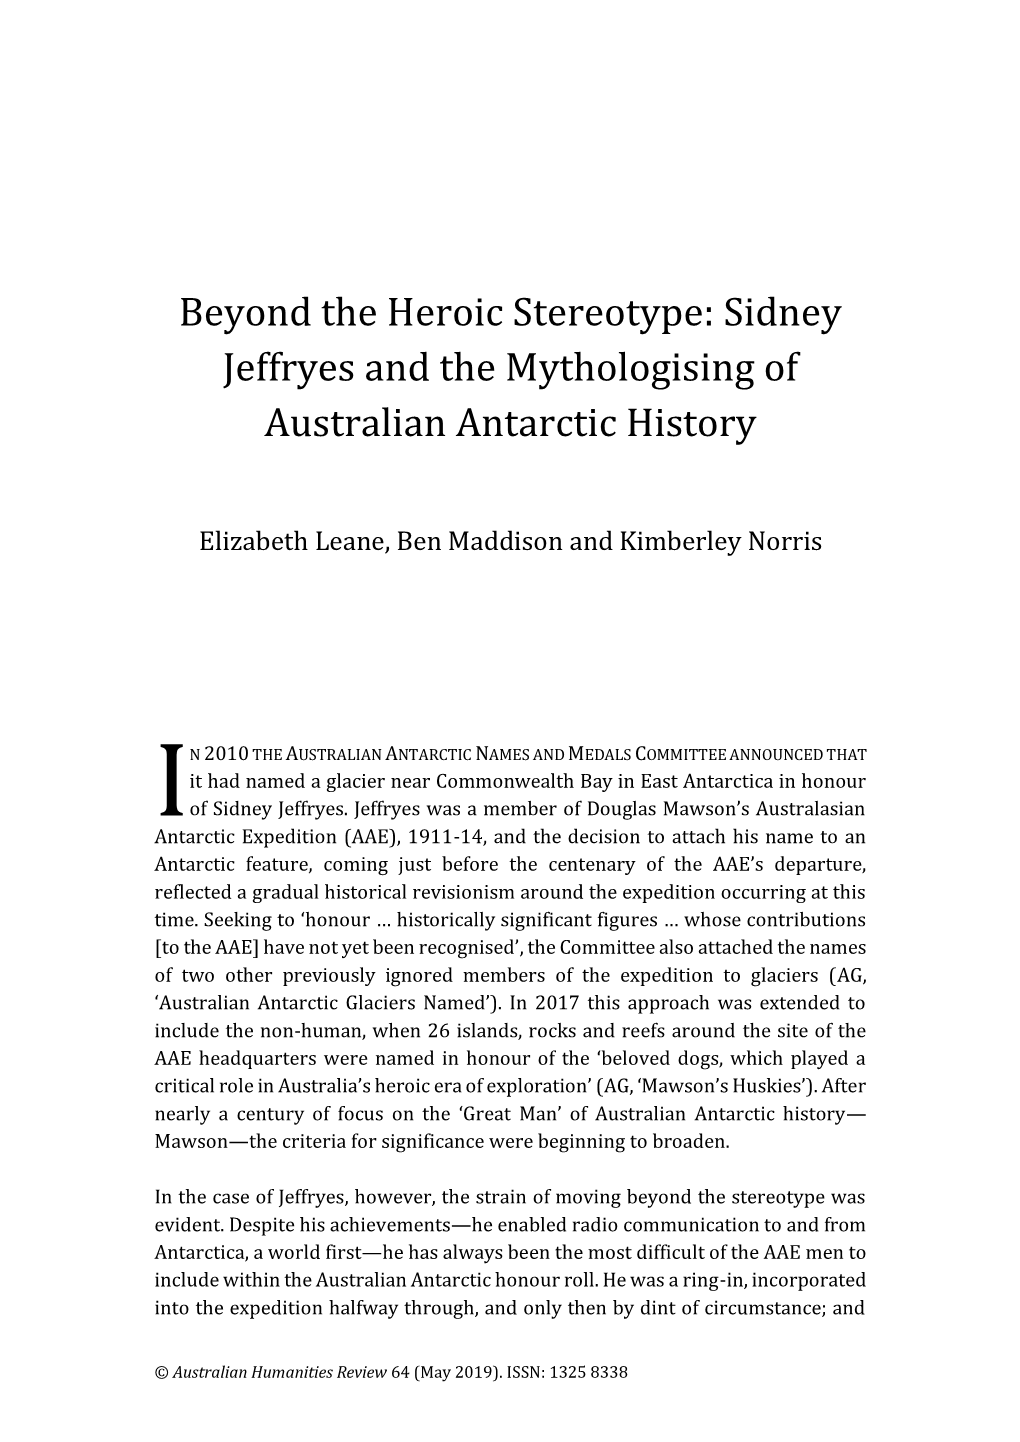 Sidney Jeffryes and the Mythologising of Australian Antarctic History